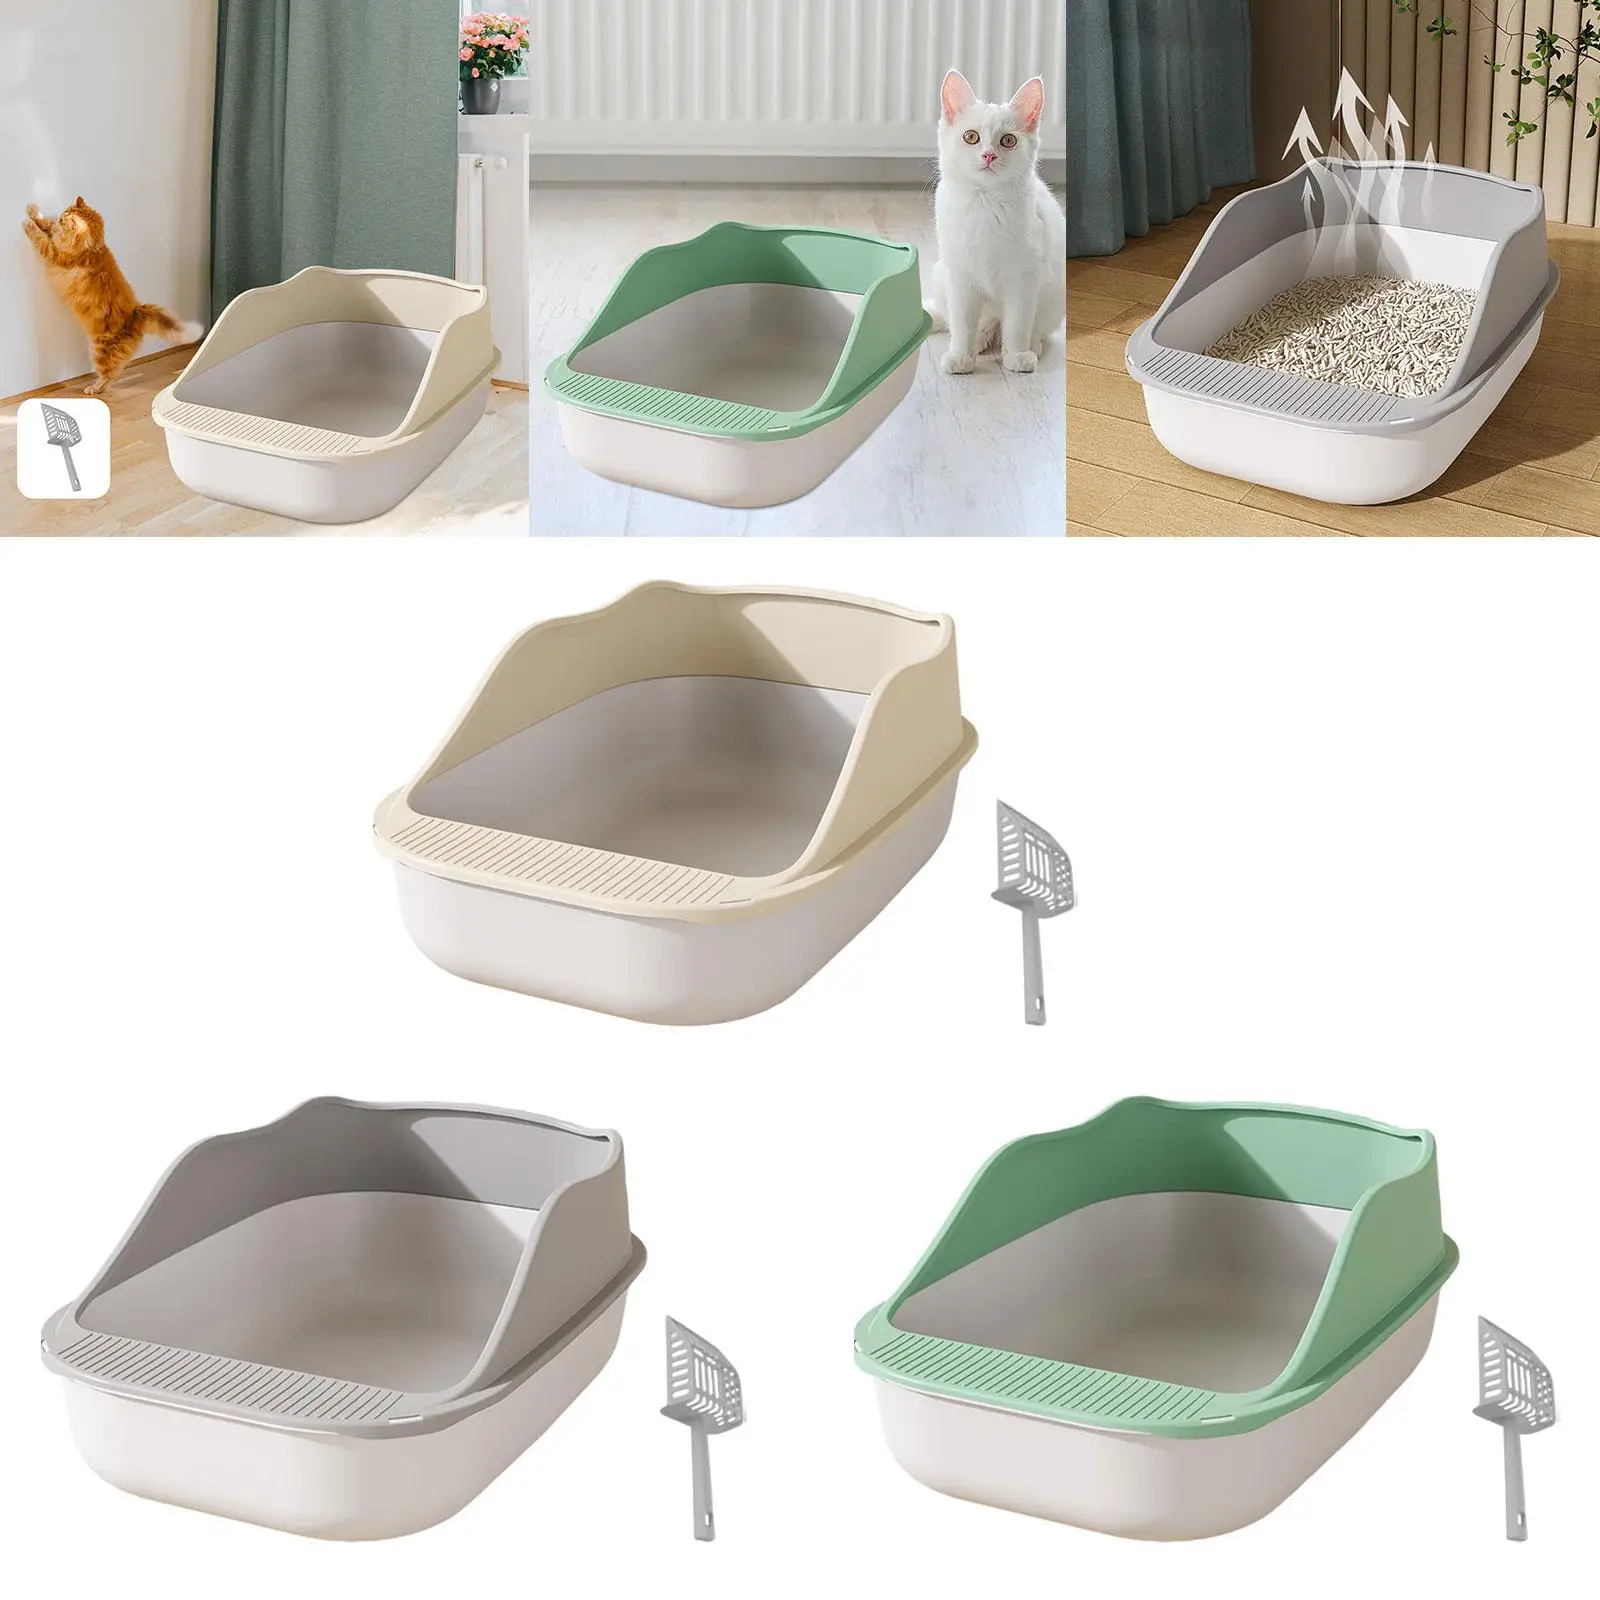 Cat Litter Box Easy Cleaning Durable Anti Splashing Semi Closed Cat Potty Pan